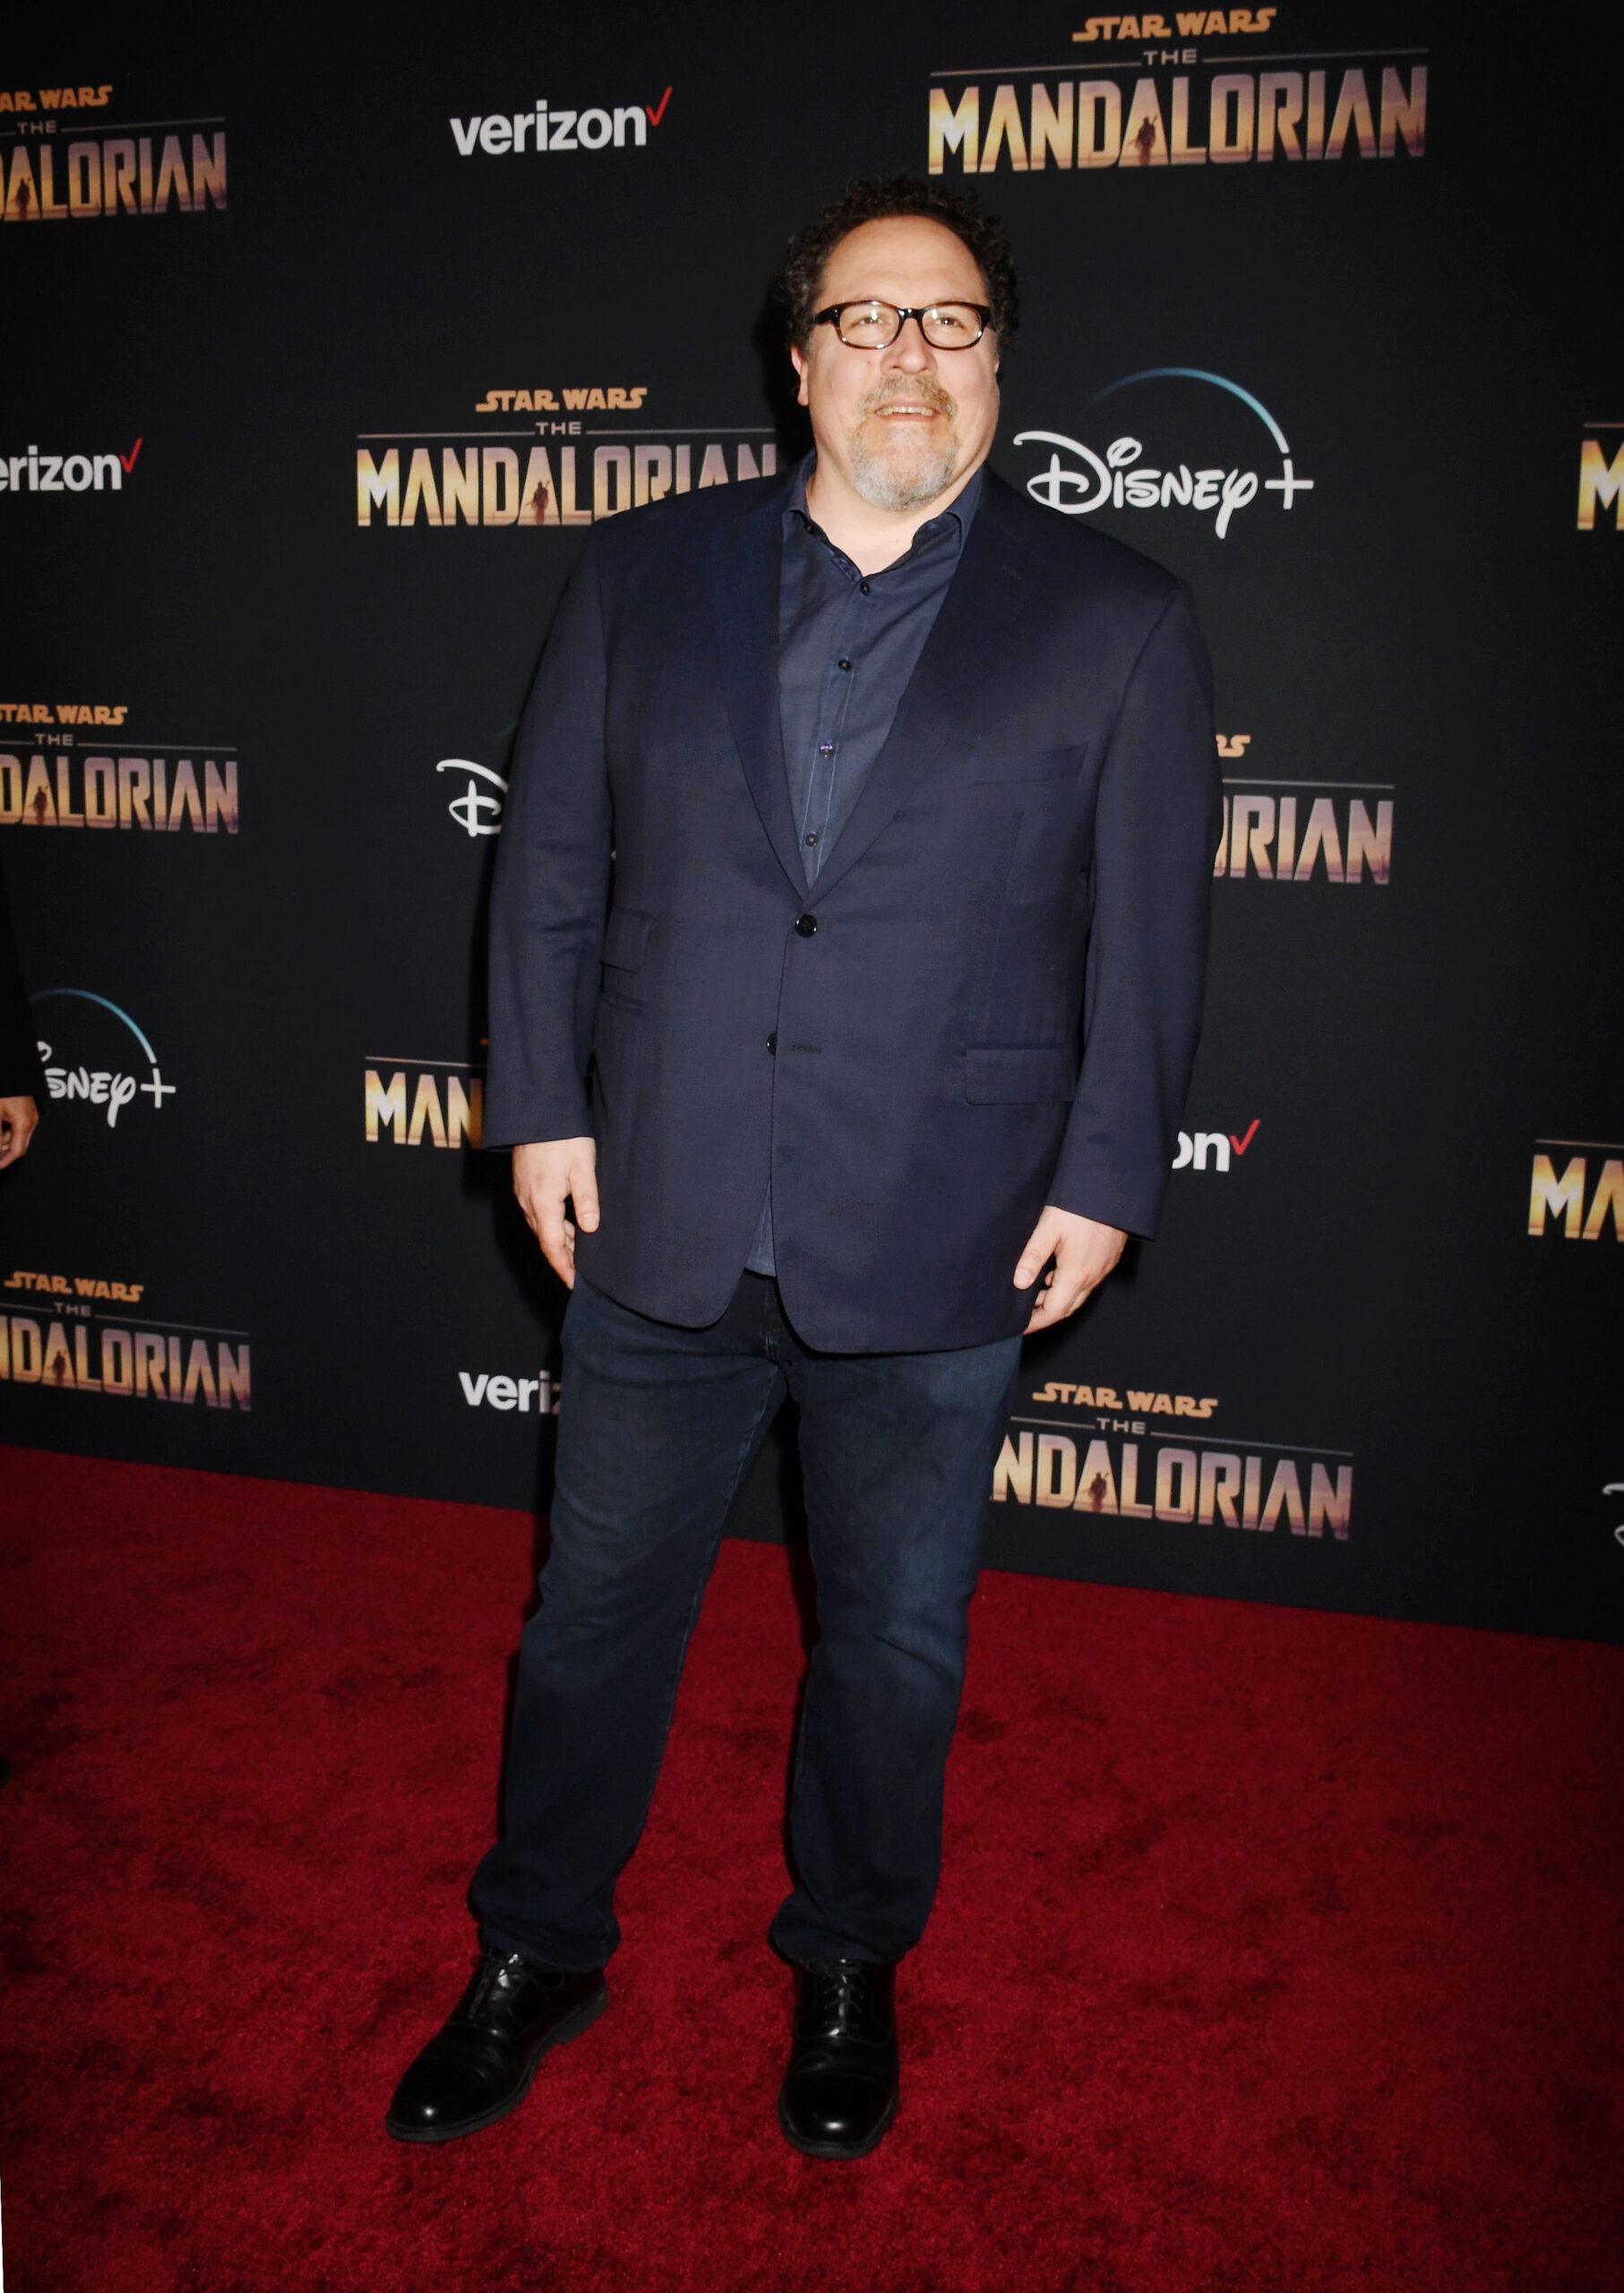 Jon Favreau at the Premiere Of Disney+'s "The Mandalorian" - Arrivals